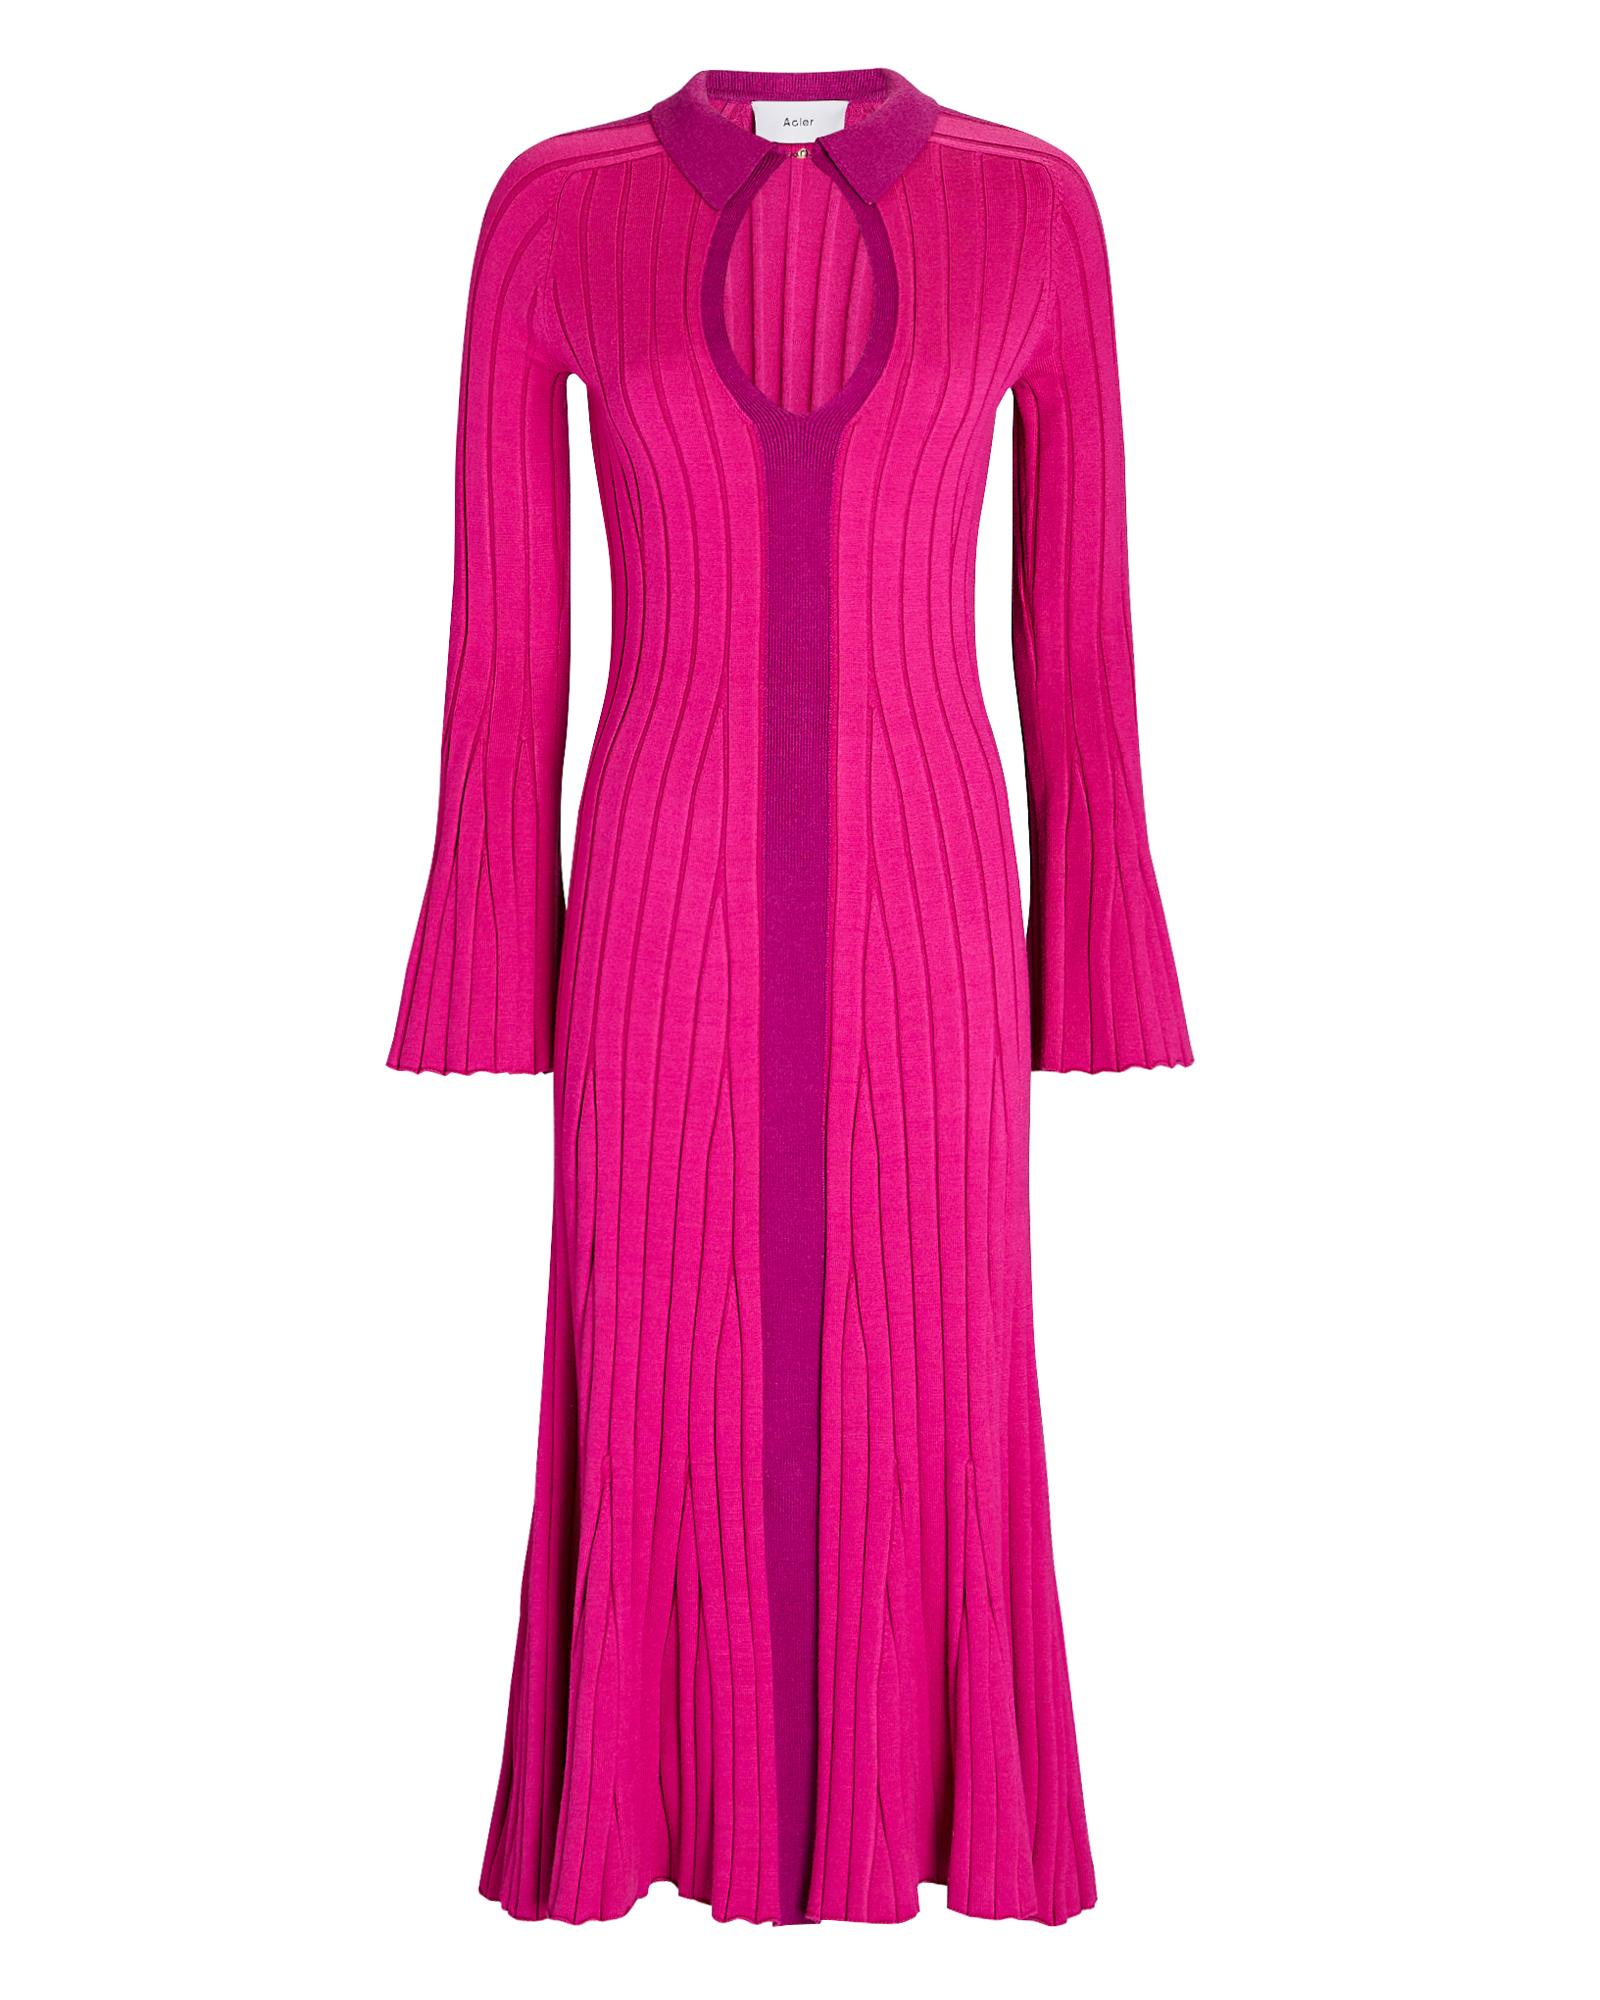 Acler Flint Fluted Rib Knit Midi Dress in Pink | Lyst Canada